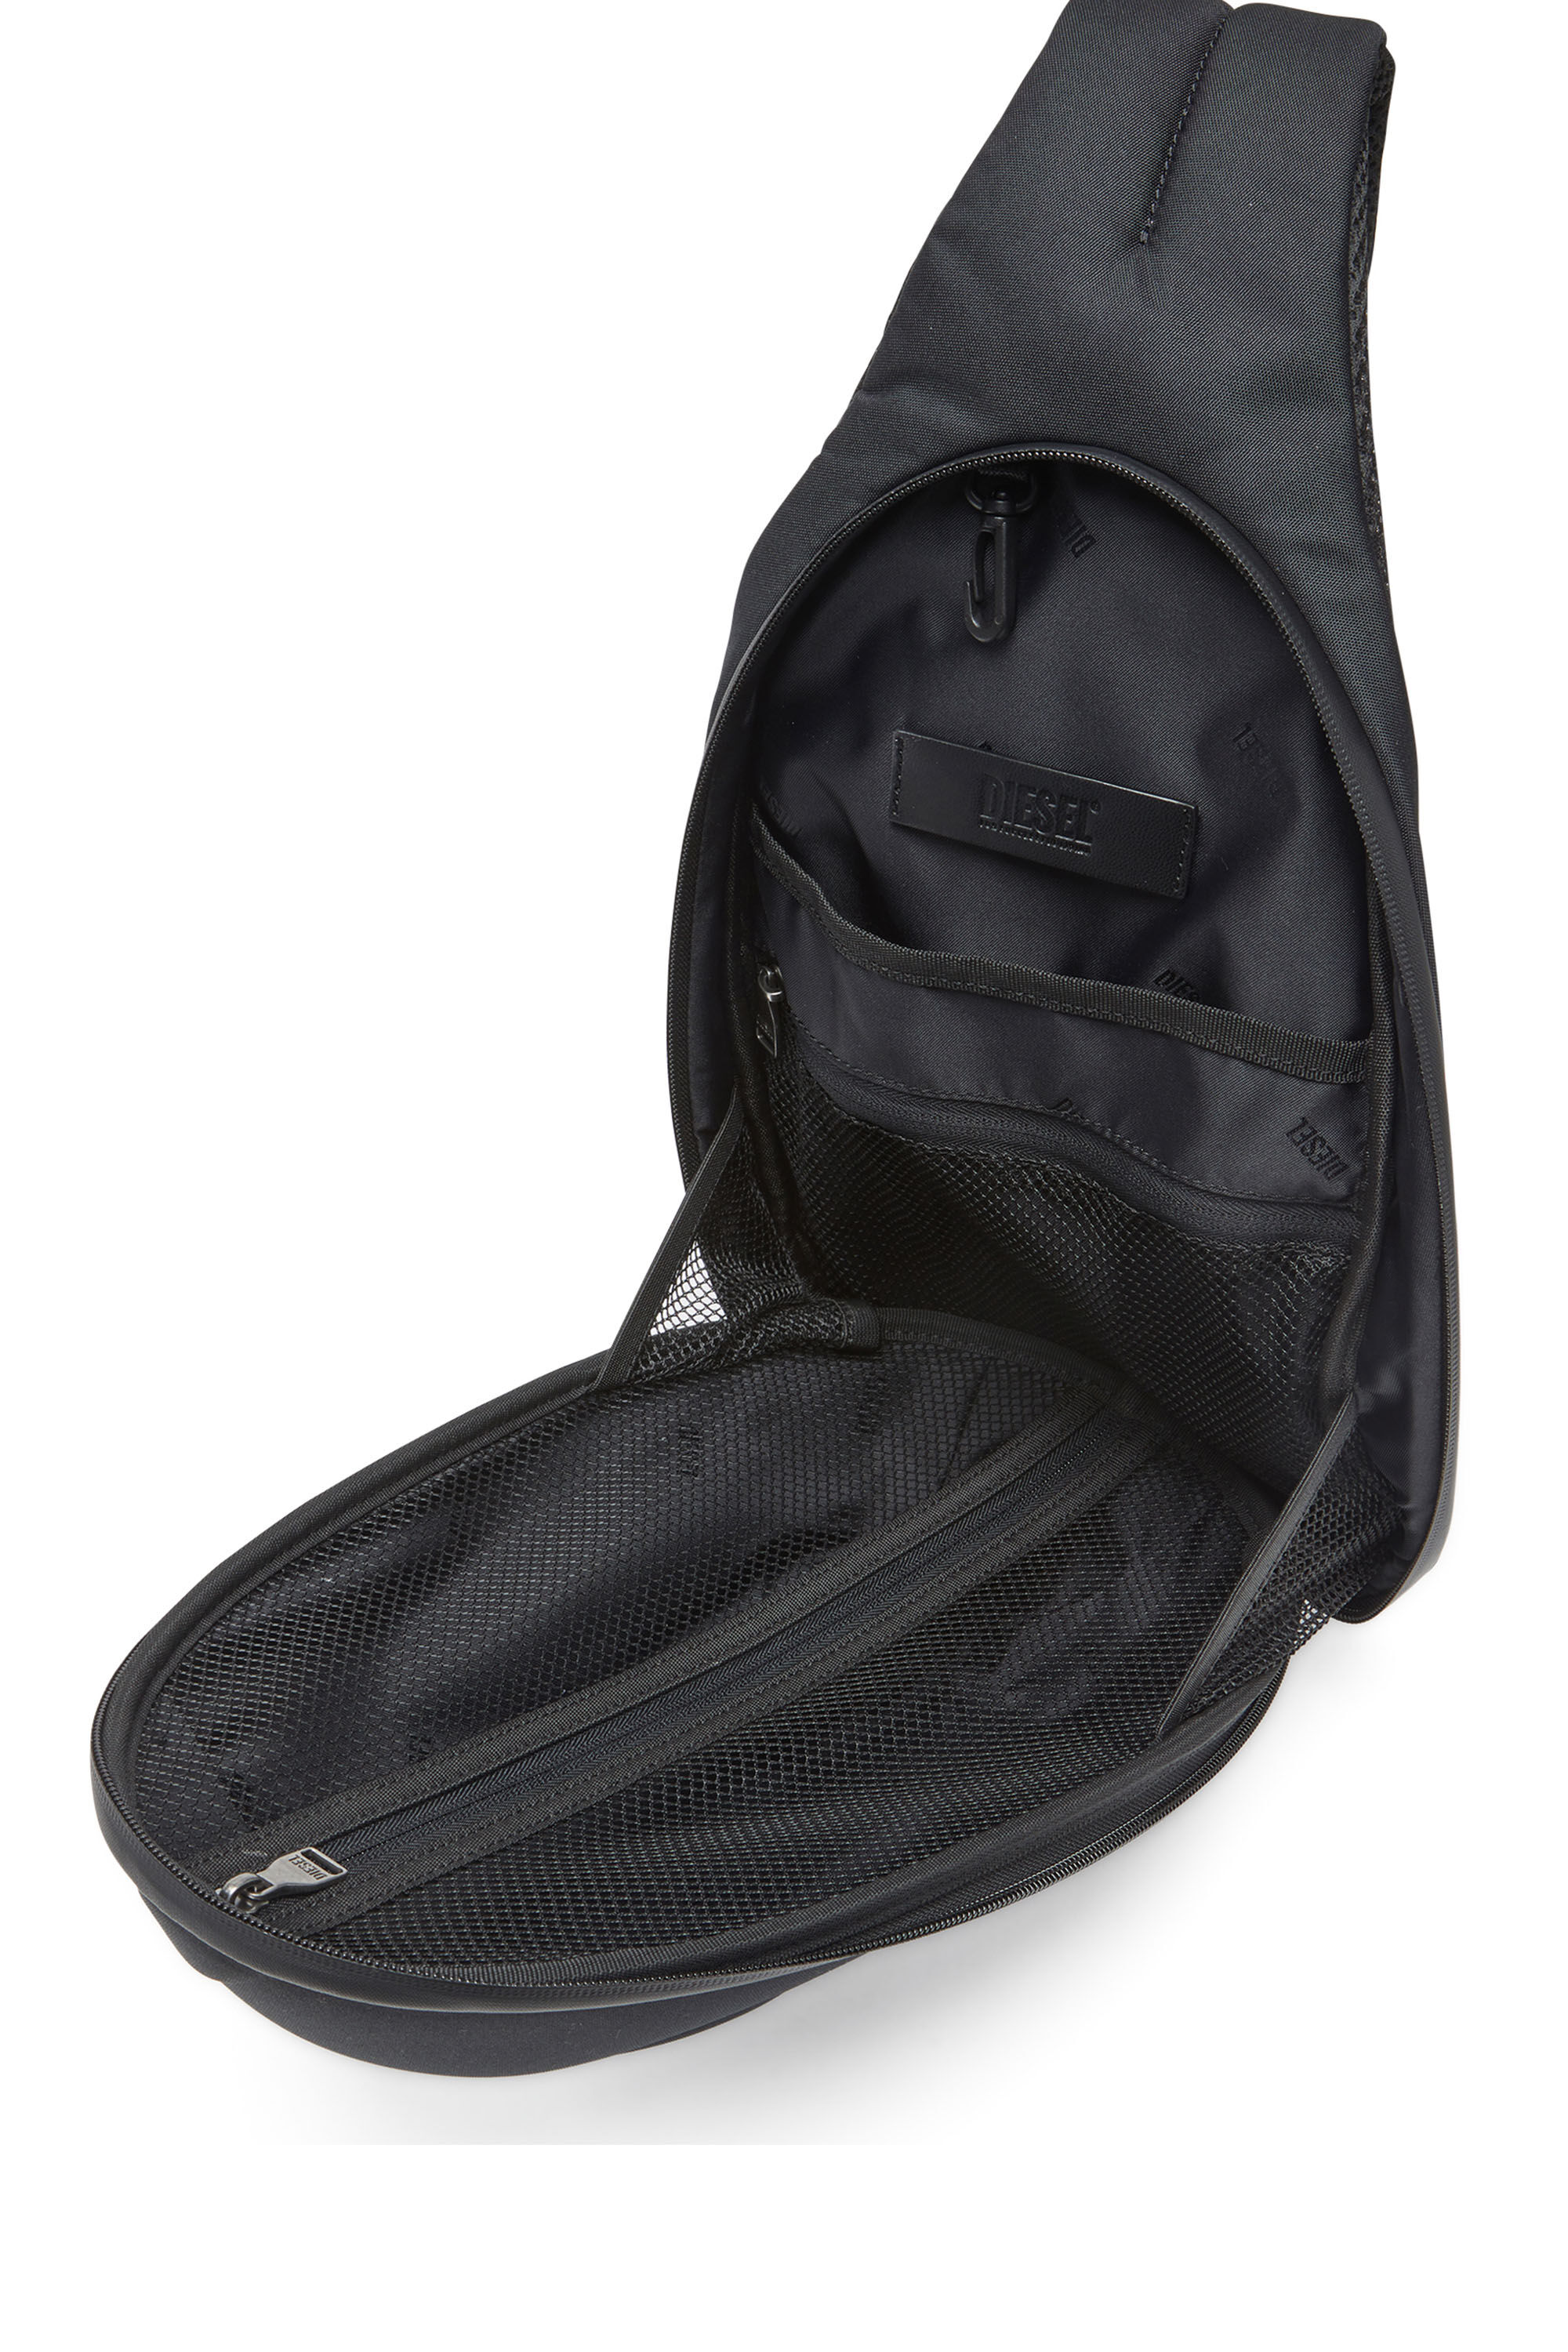 1DR-POD SLING BAG Man: Hard shell sling backpack